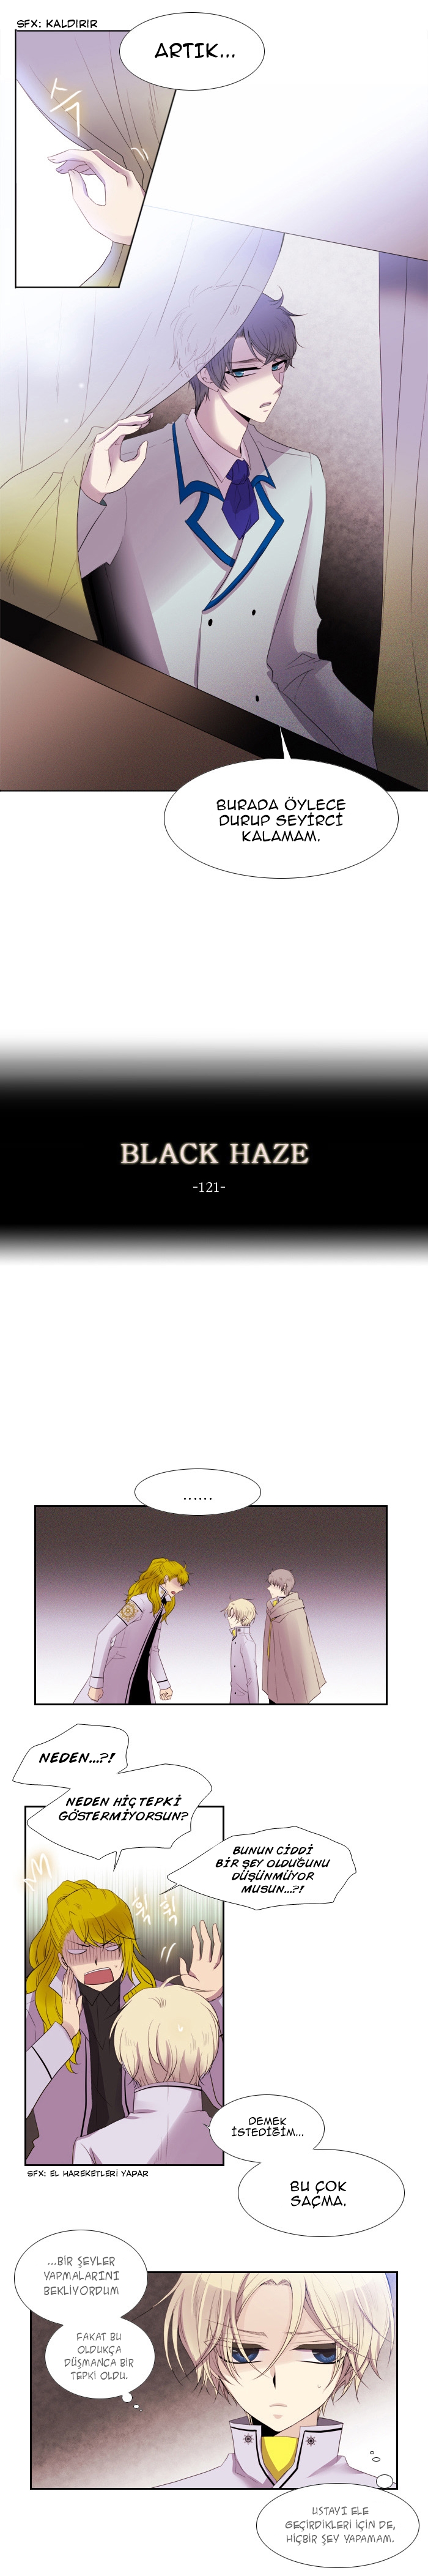 Black Haze: Chapter 121 - Page 3